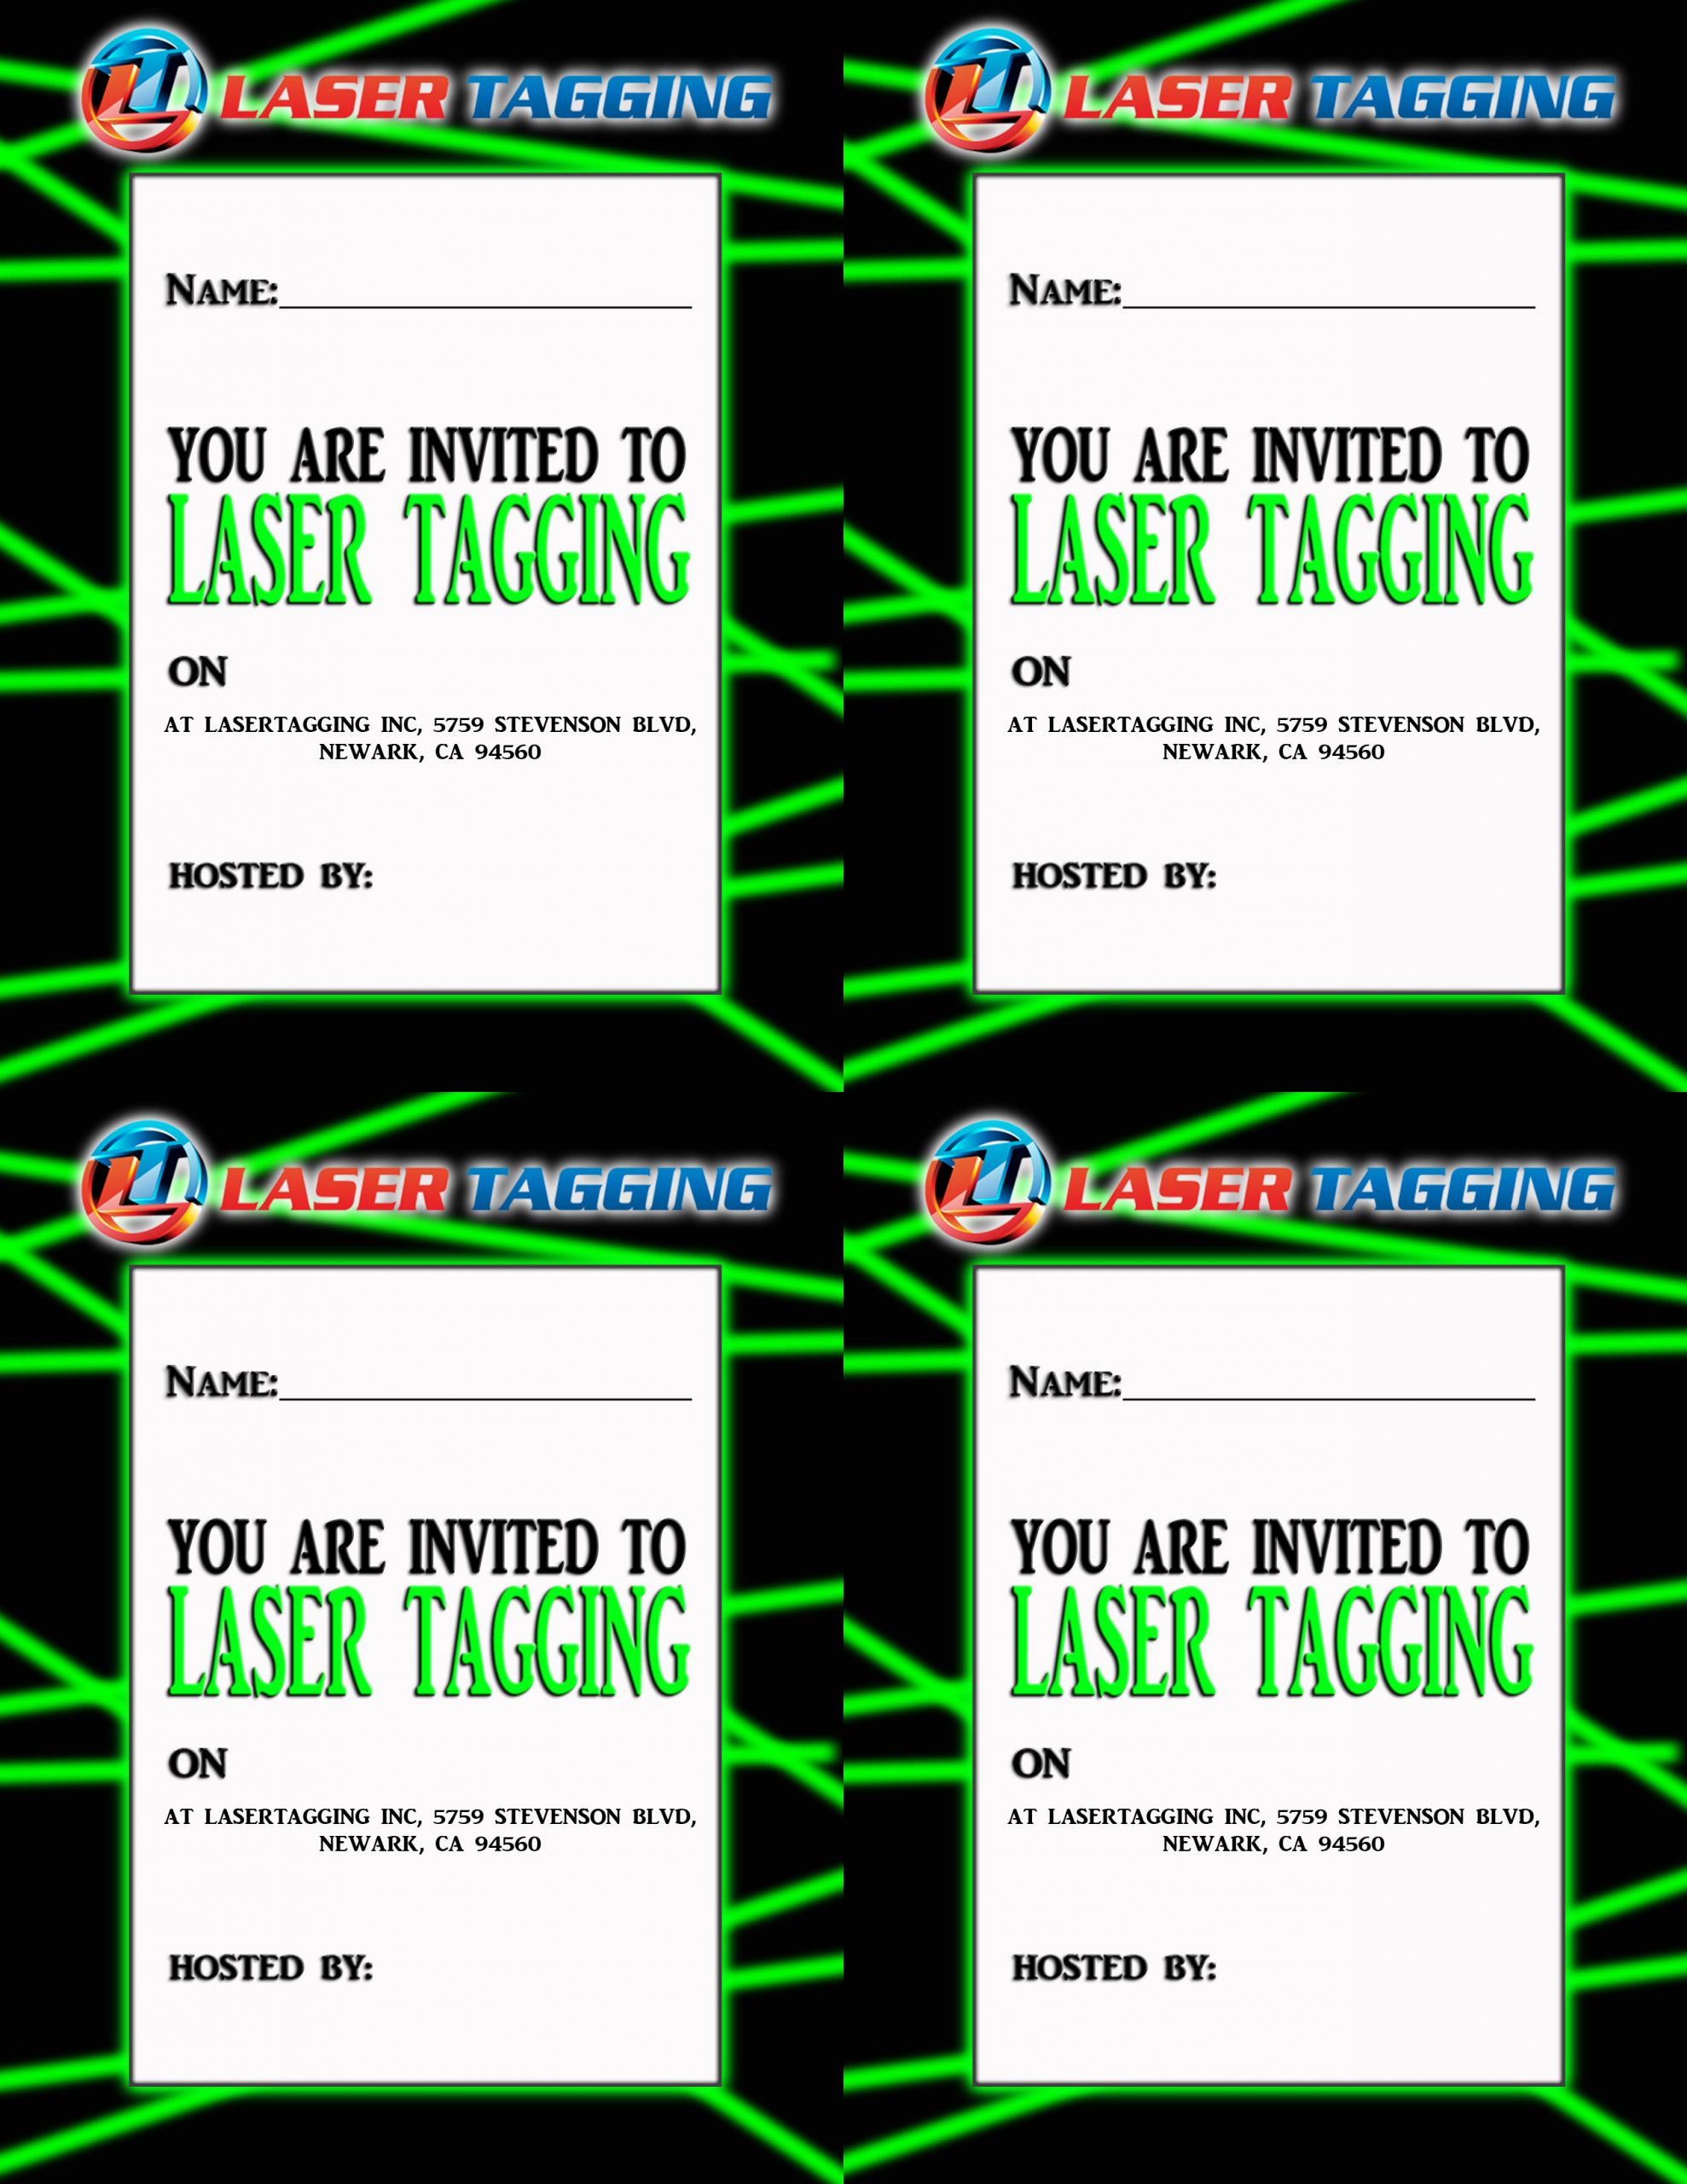 Laser Tag Birthday Invitations
 40th Birthday Ideas Free Laser Tag Birthday Invitation